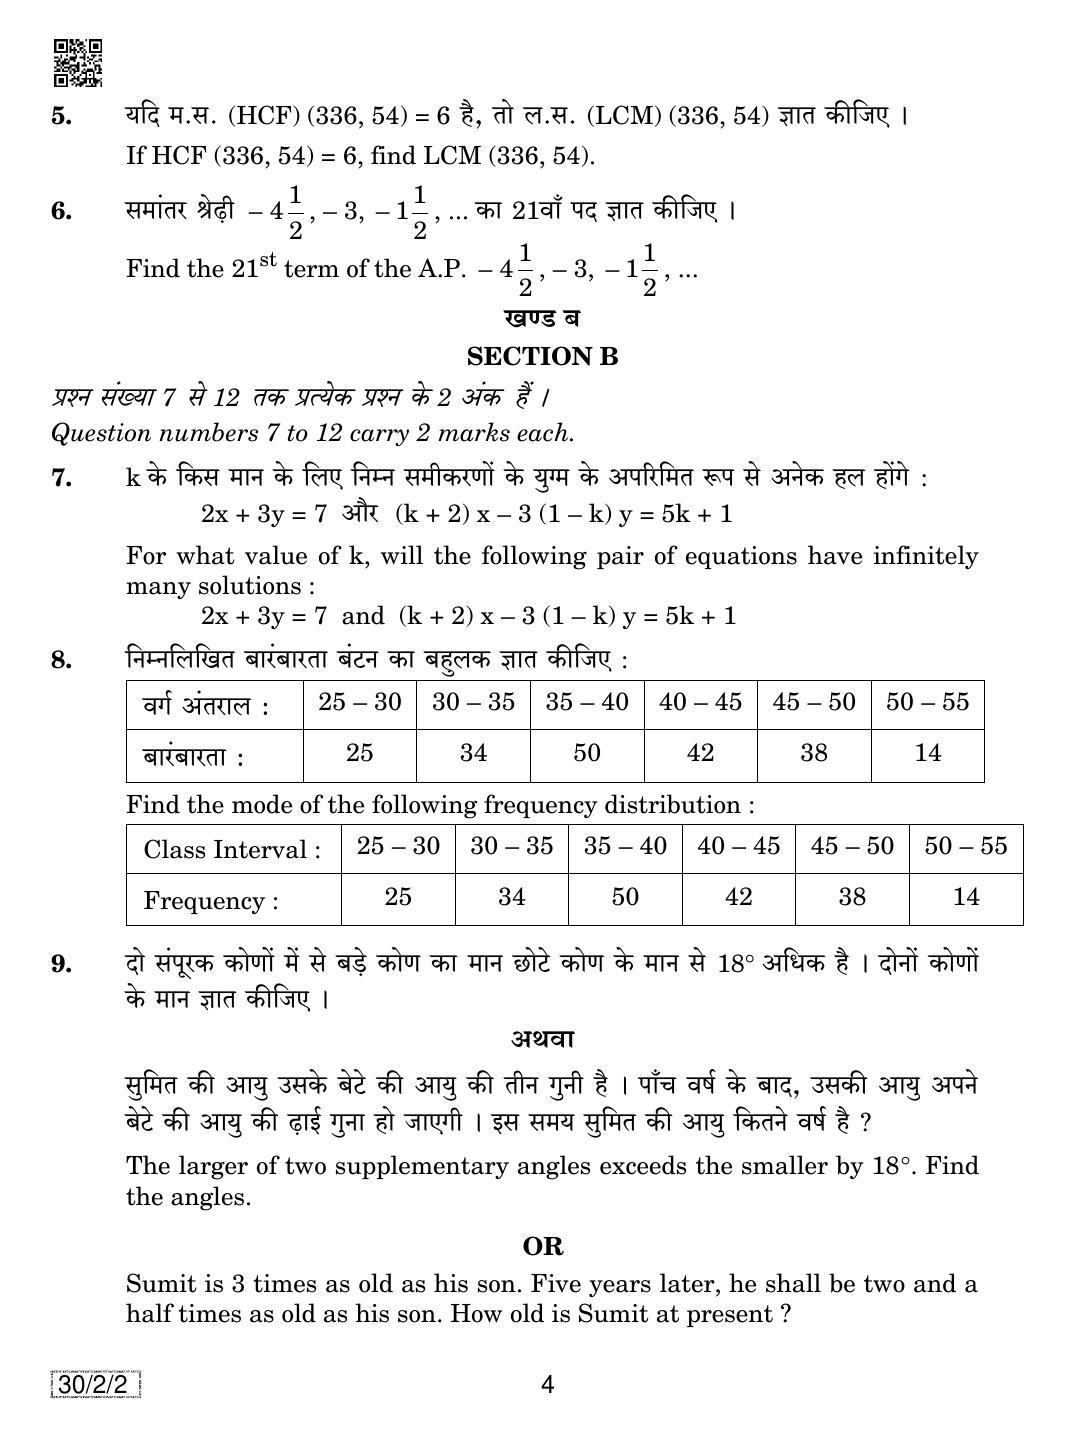 CBSE Class 10 Maths (30/2/2 - SET 2) 2019 Question Paper - Page 4